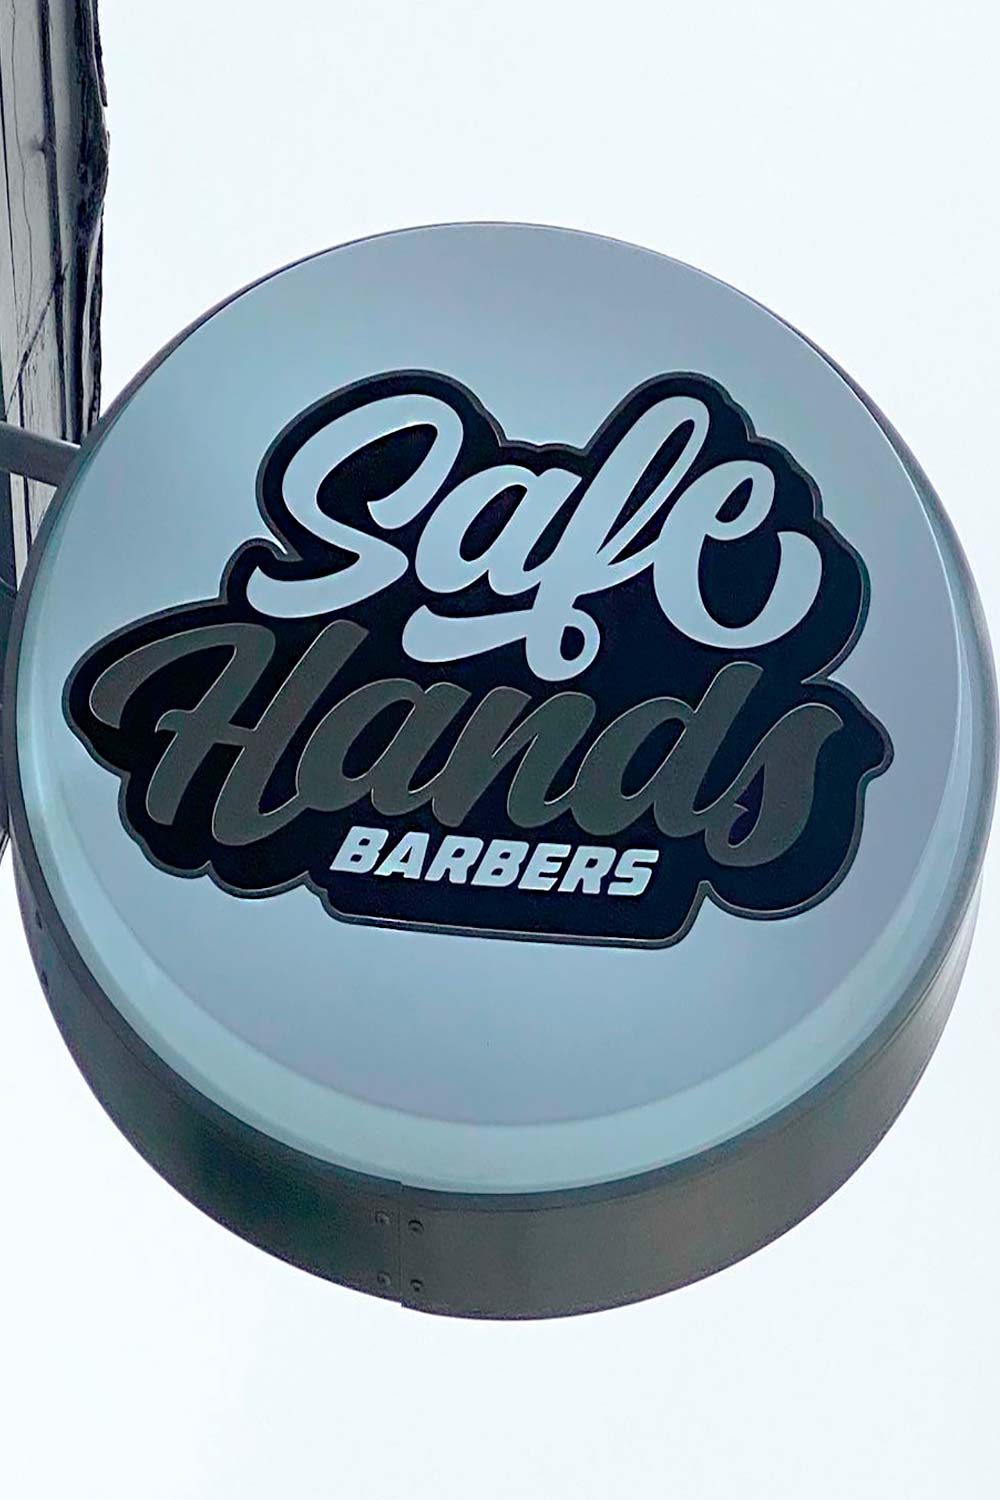 Safe Hands Barbers 5